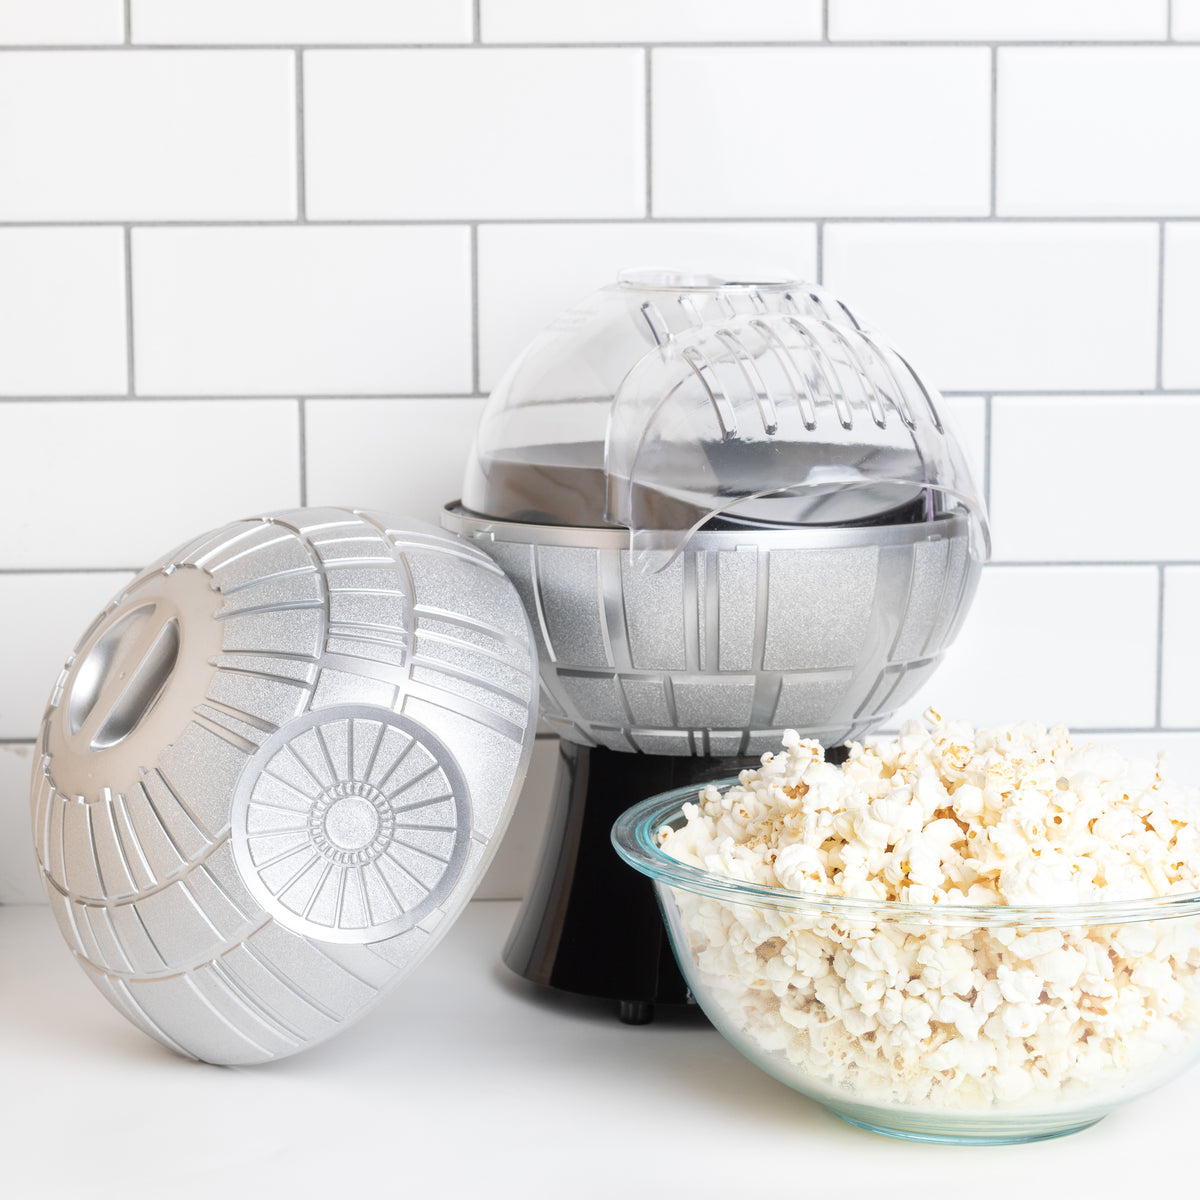 Star Wars Death Star Popcorn Maker